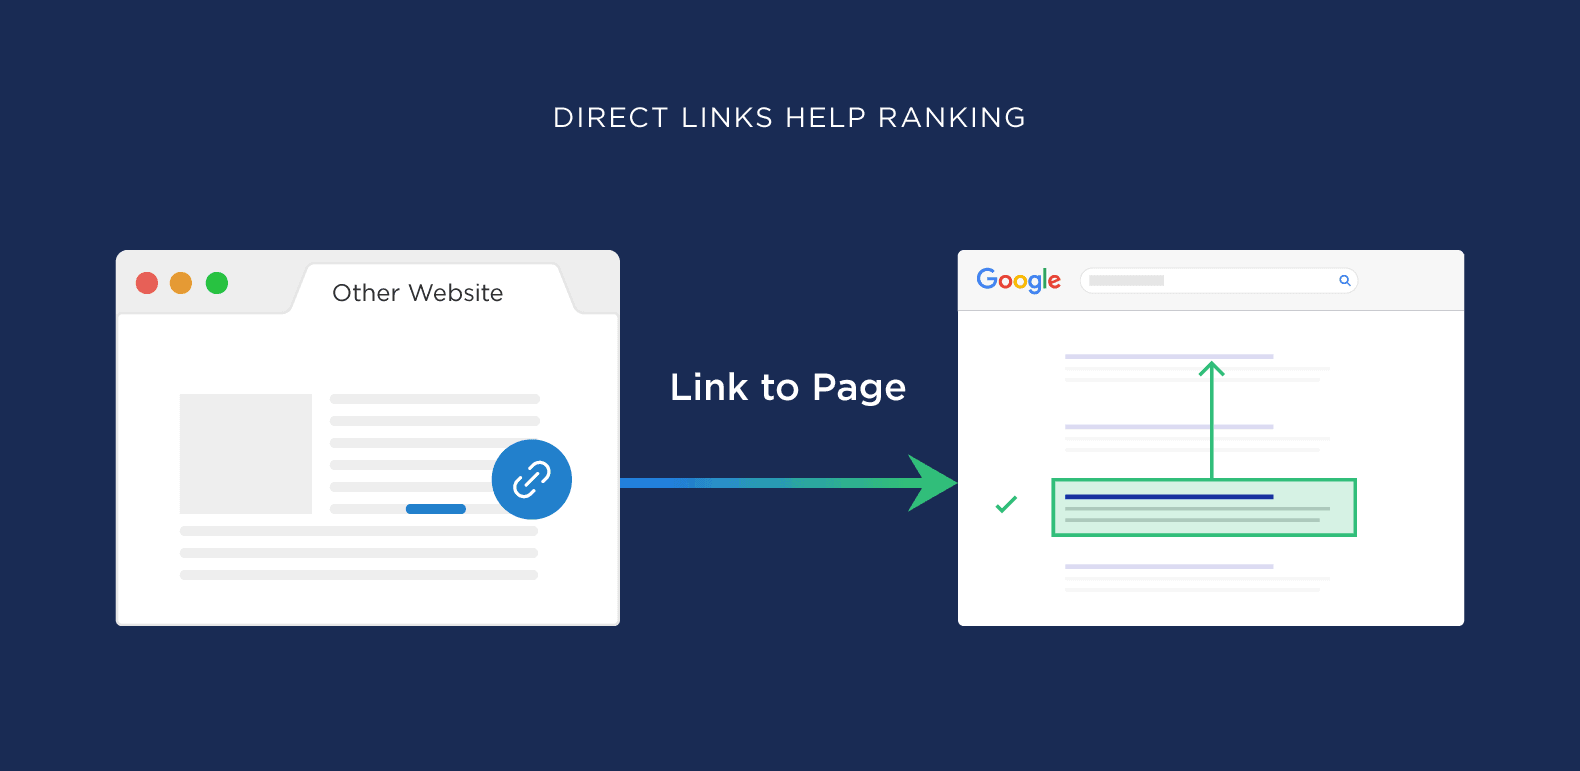 Direct links help rankings